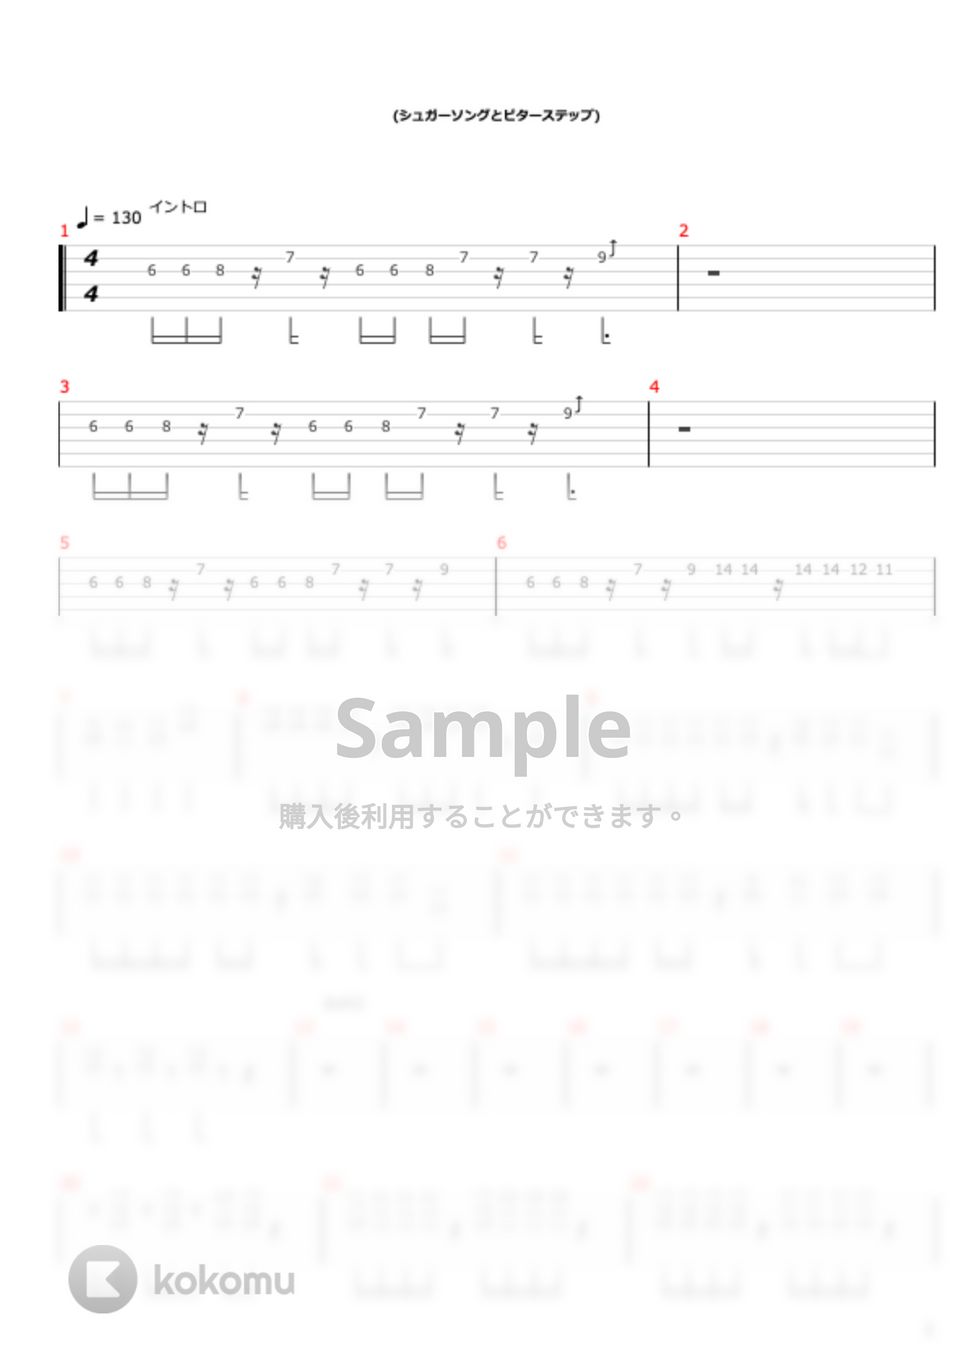 UNISON SQUARE GARDEN - シュガーソング とビターステップ by GUITAR makio